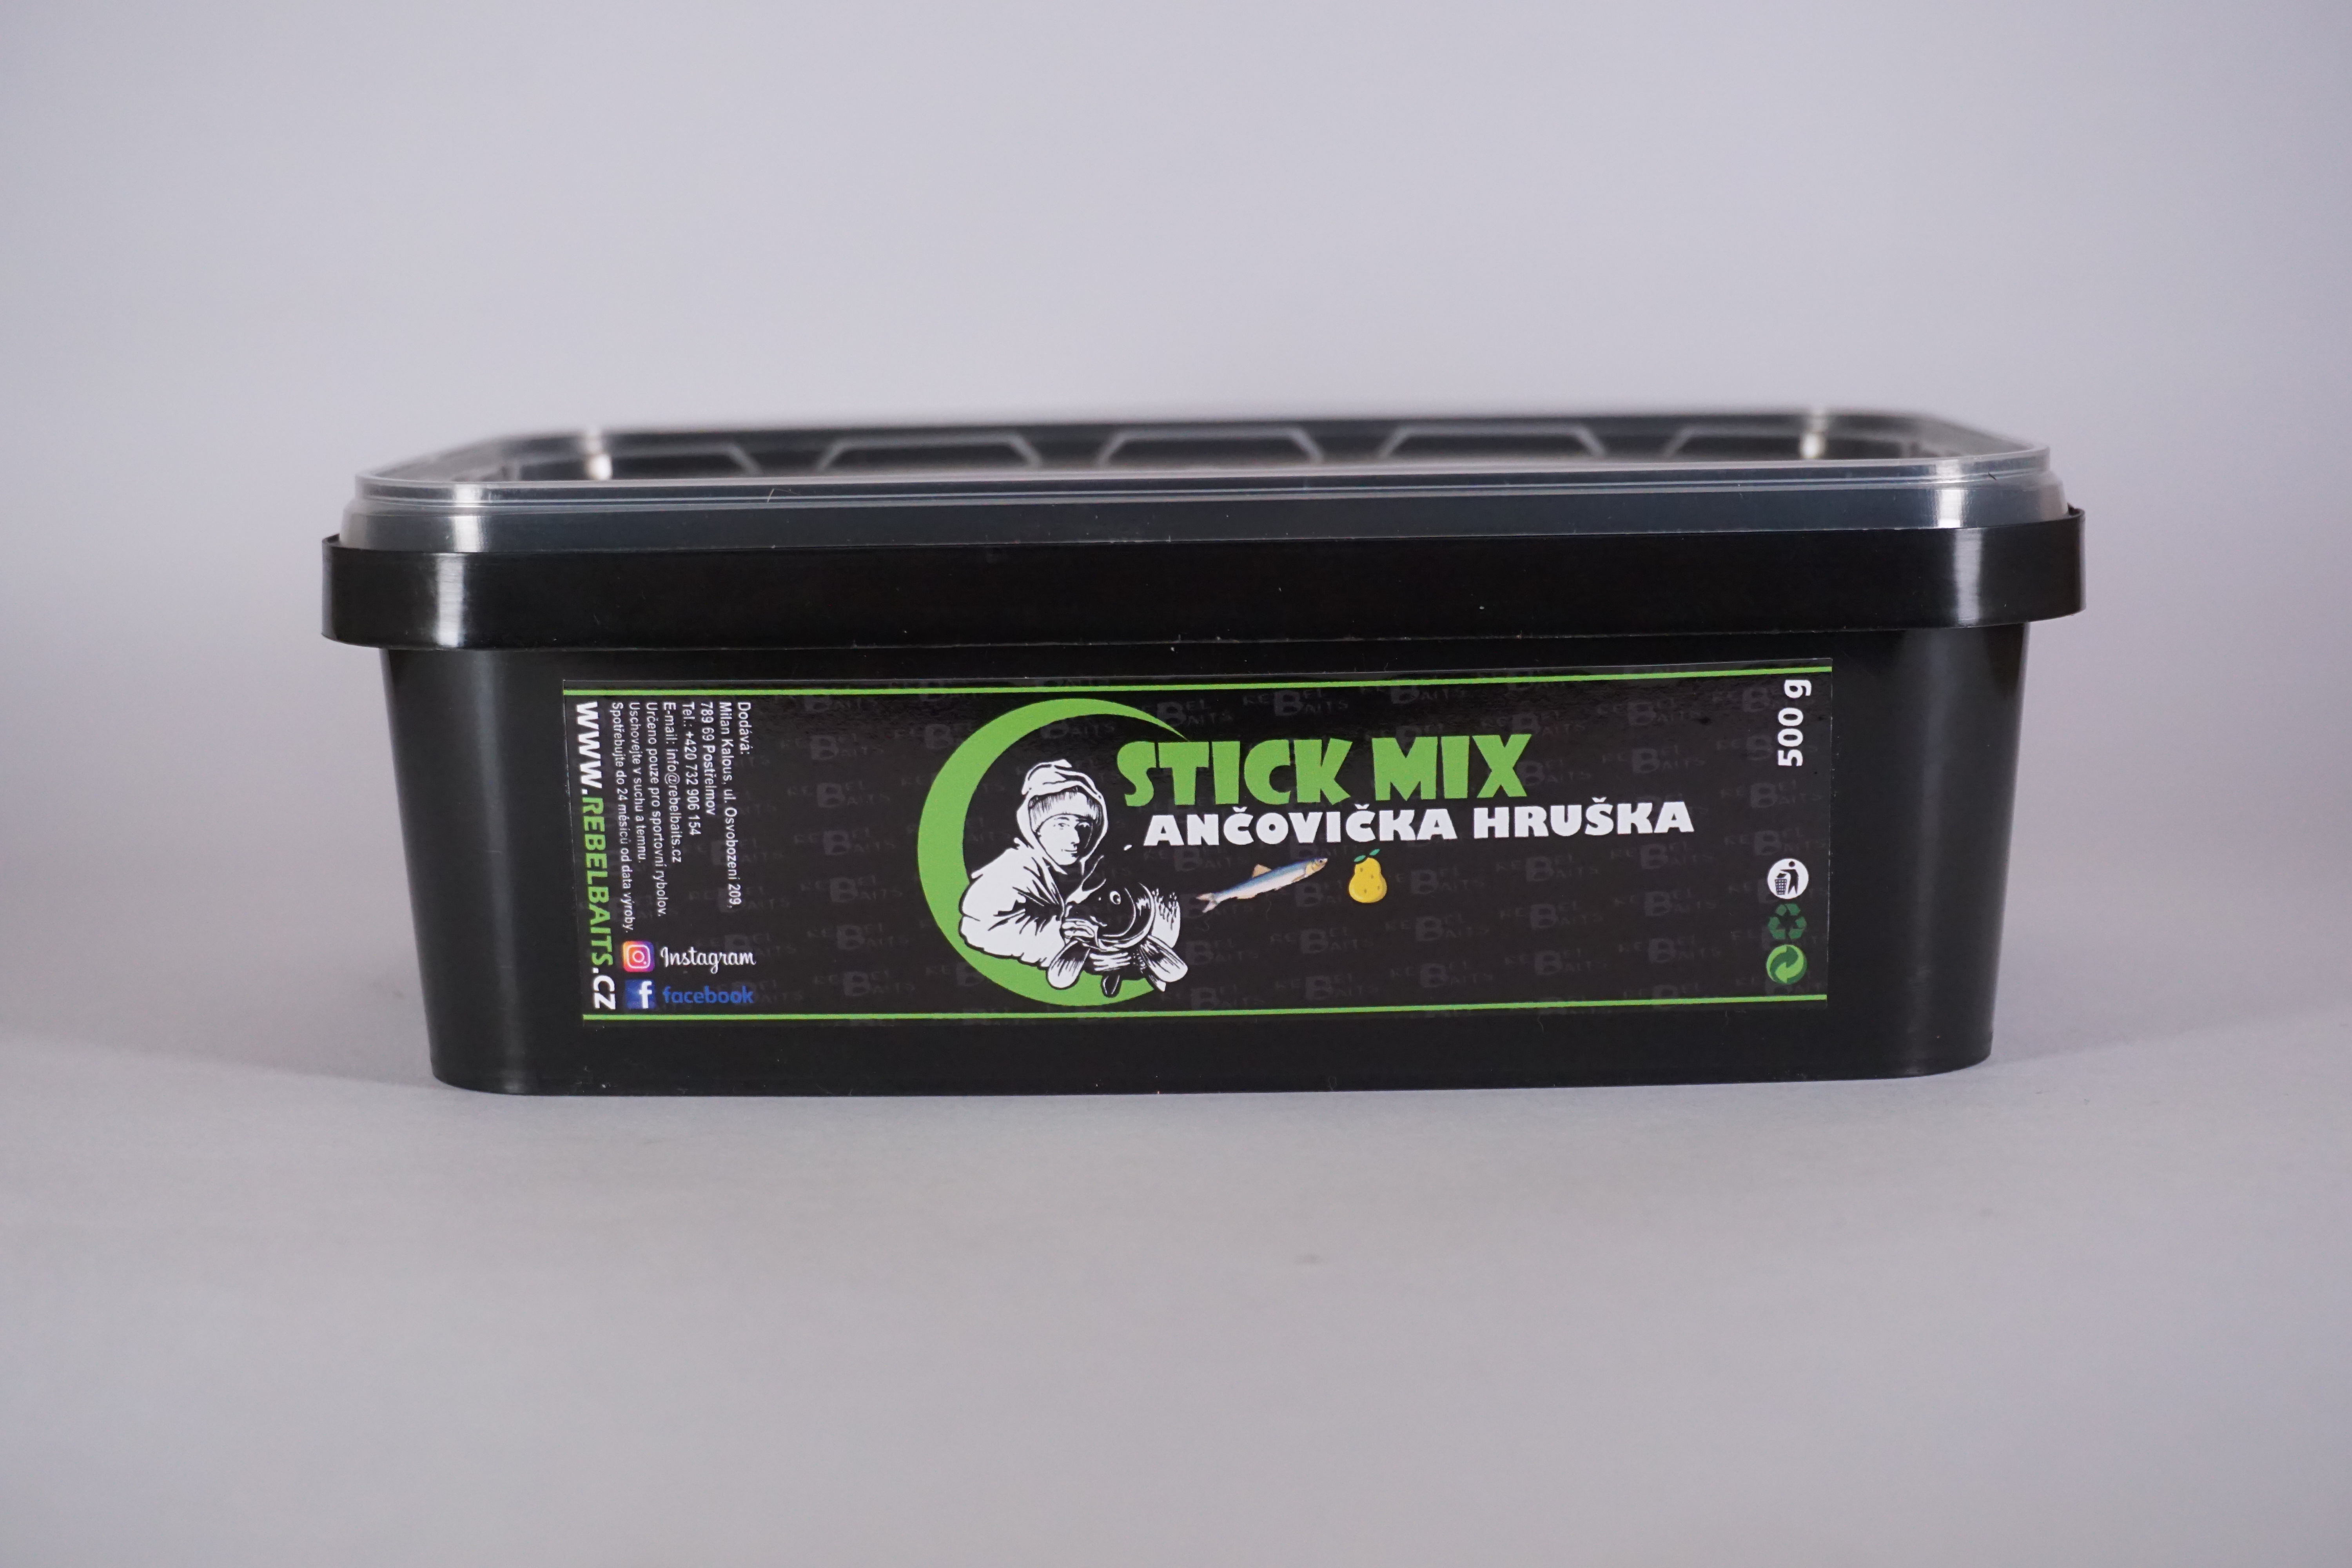 Stick mix - Ančovička Hruška